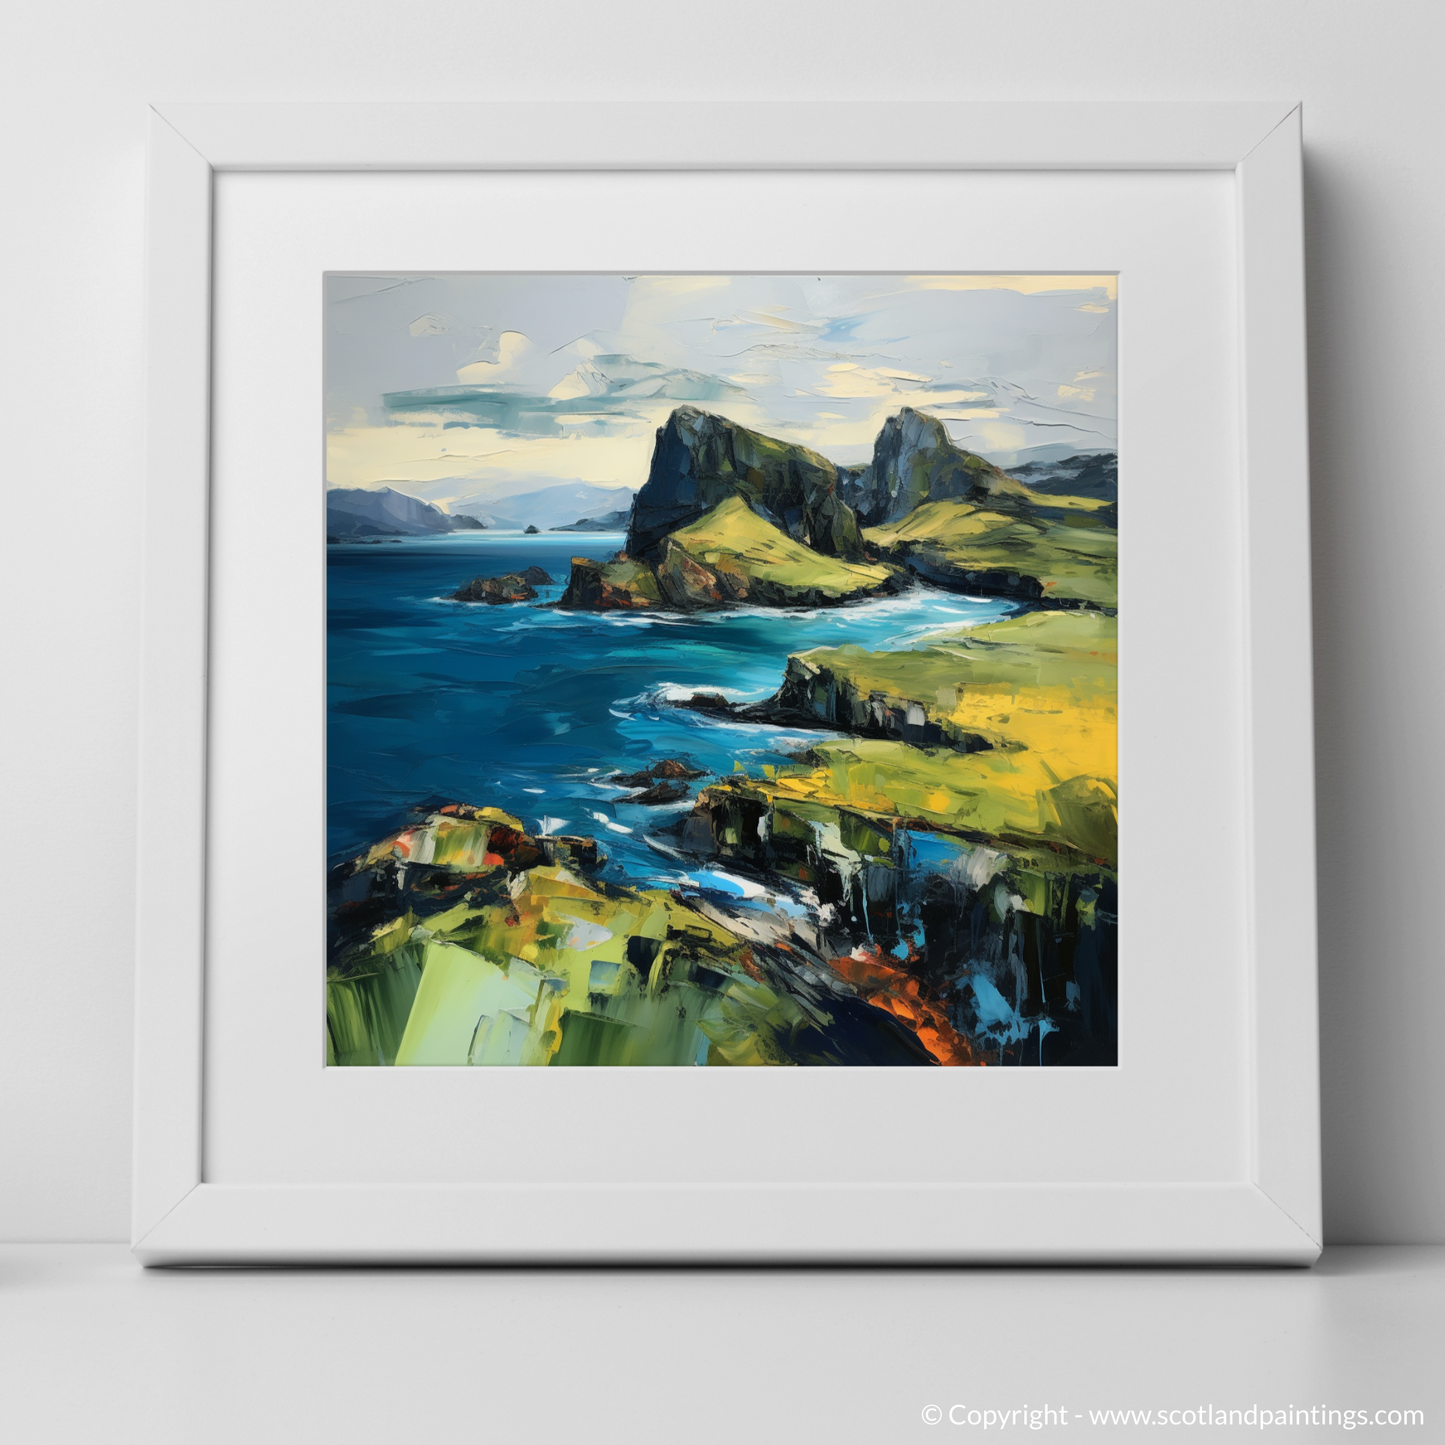 Art Print of Isle of Skye's smaller isles, Inner Hebrides with a white frame